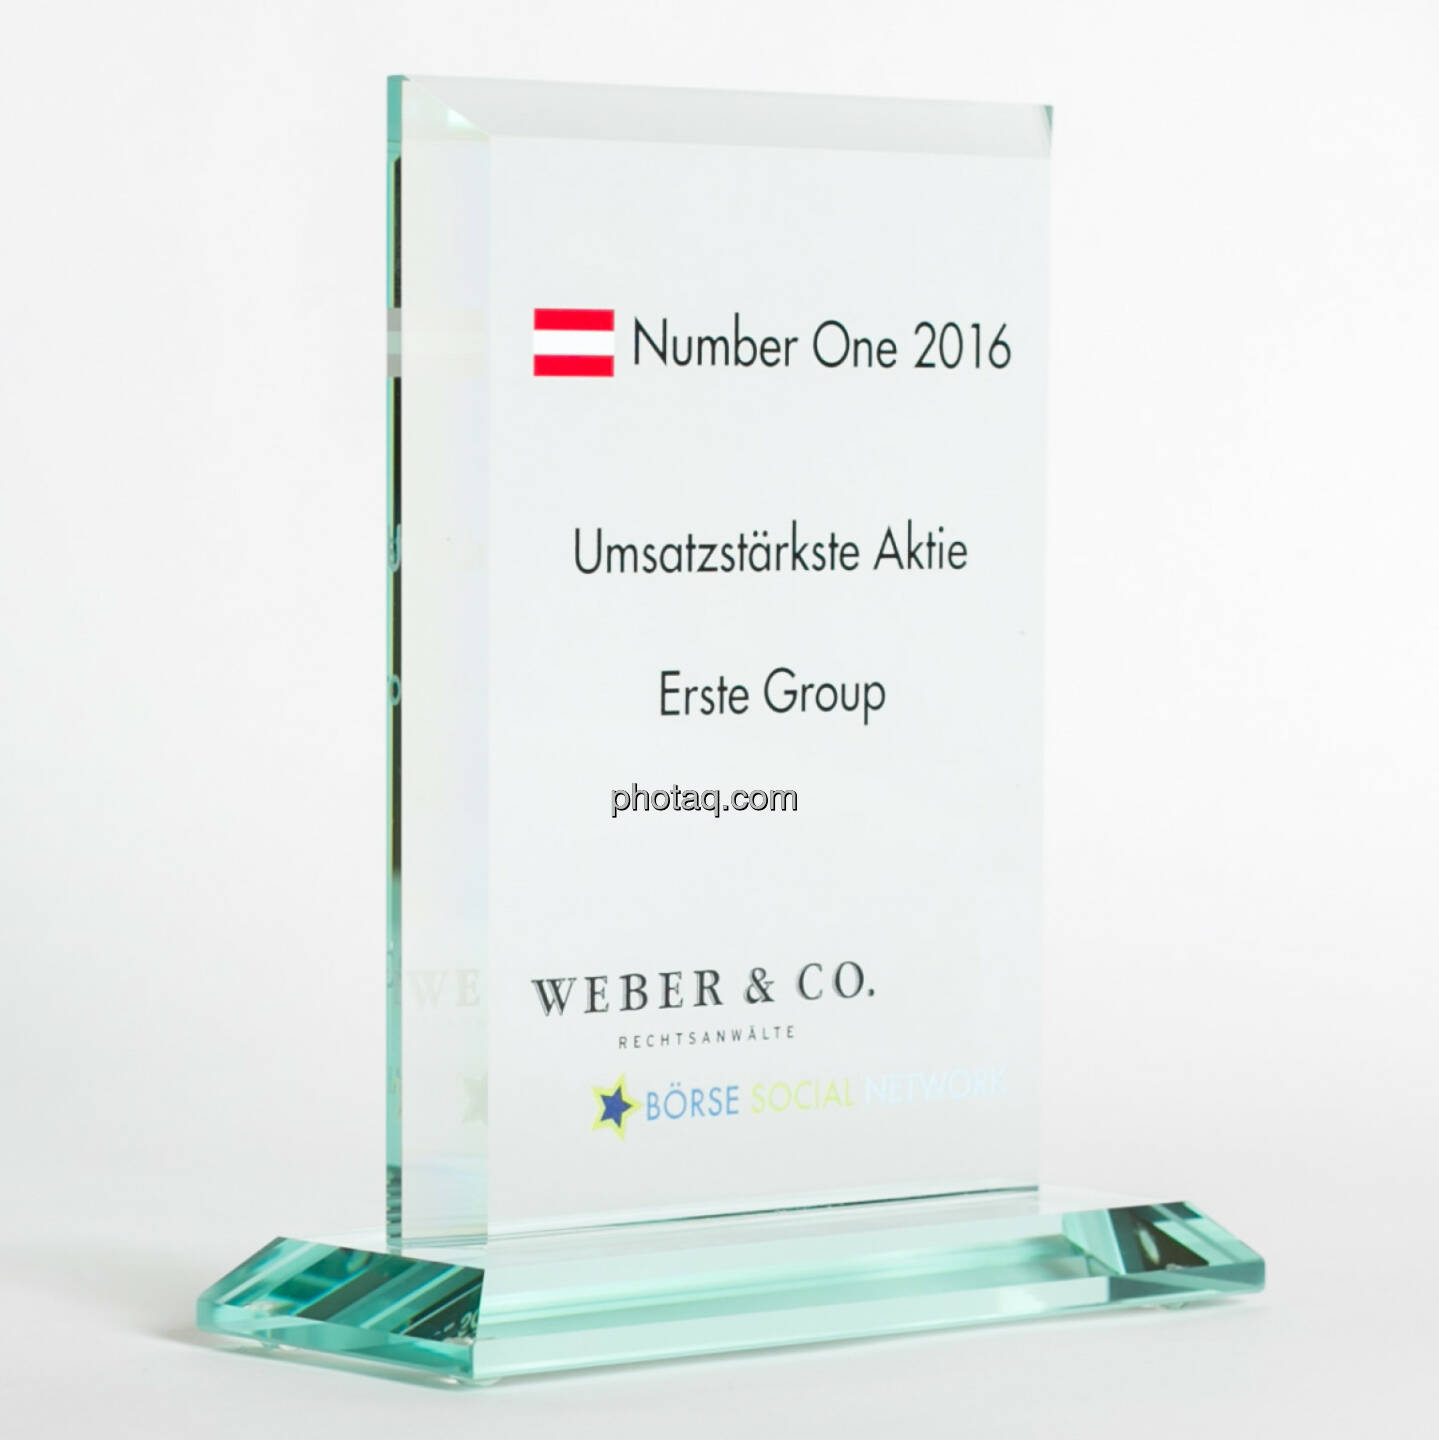 Number One Awards 2016 - Umsatzstärkste Aktie Erste Group